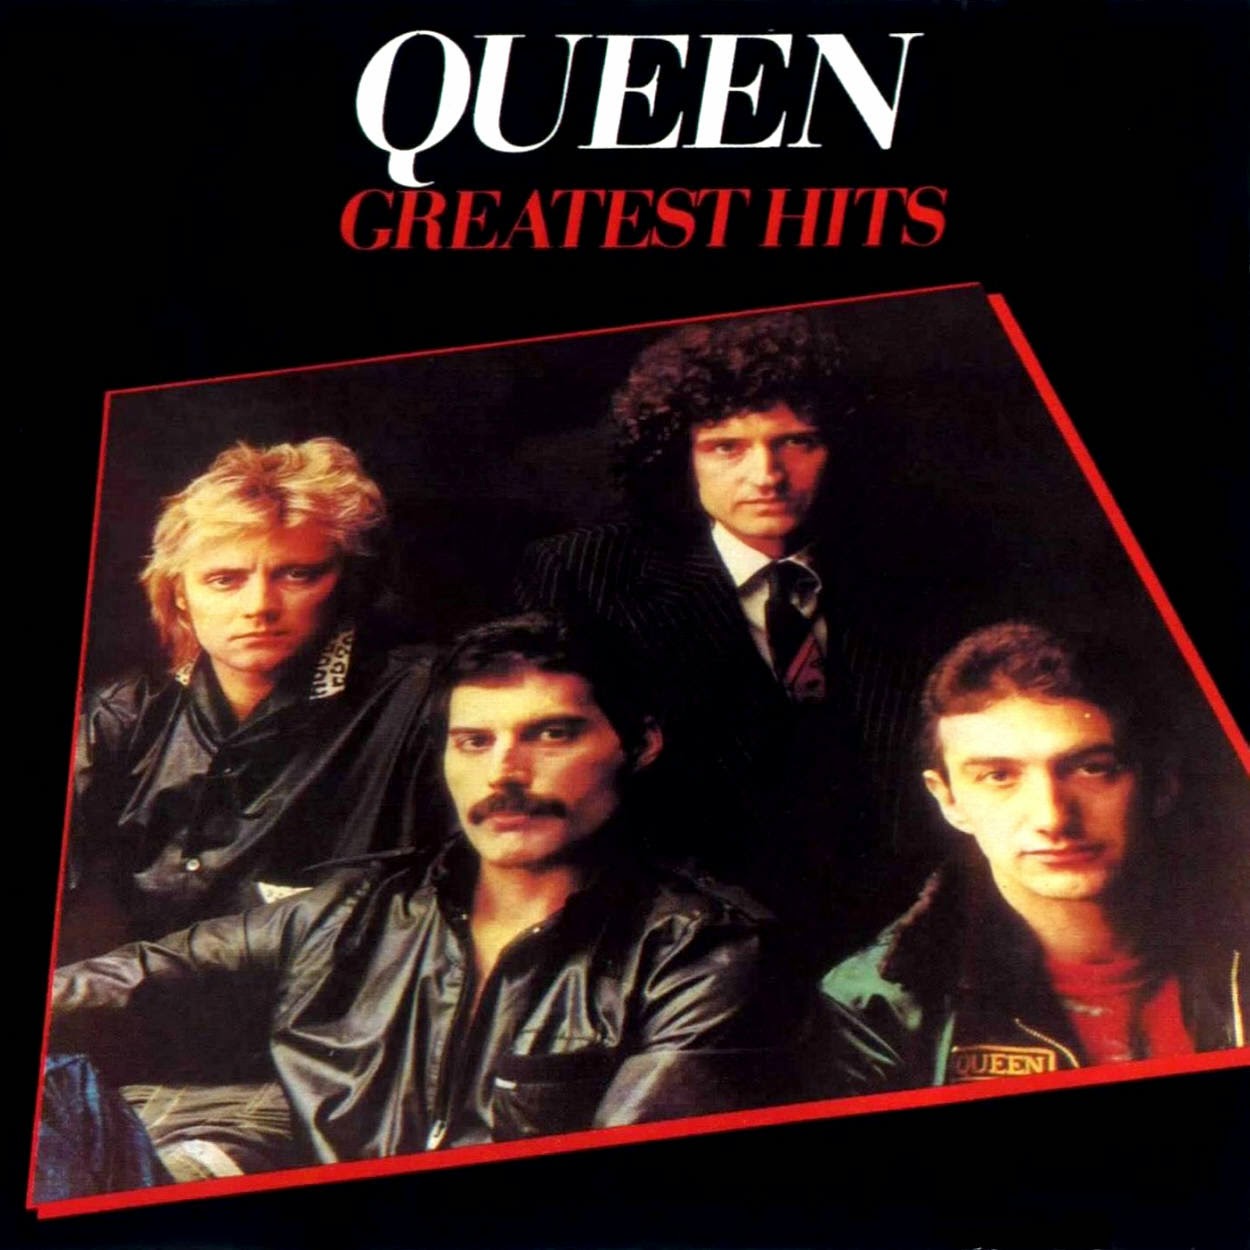 QUEEN - Greatest Hits - 2LP - 180g Half-Speed Mastered Vinyl